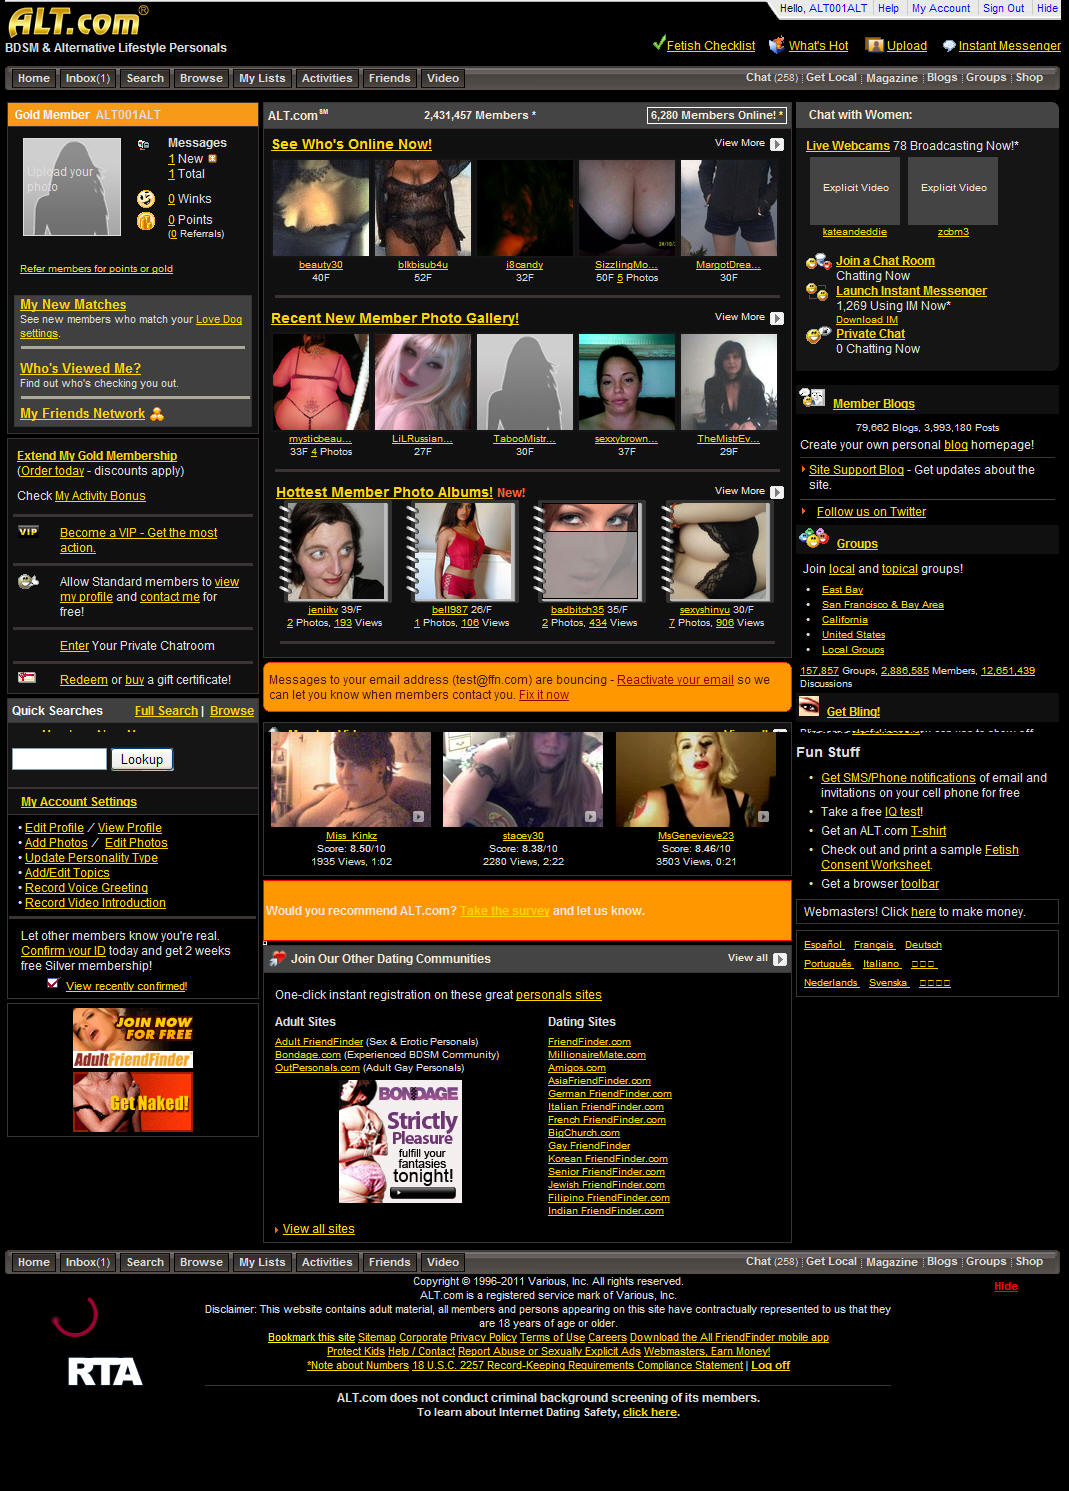 Bondage personal homepage